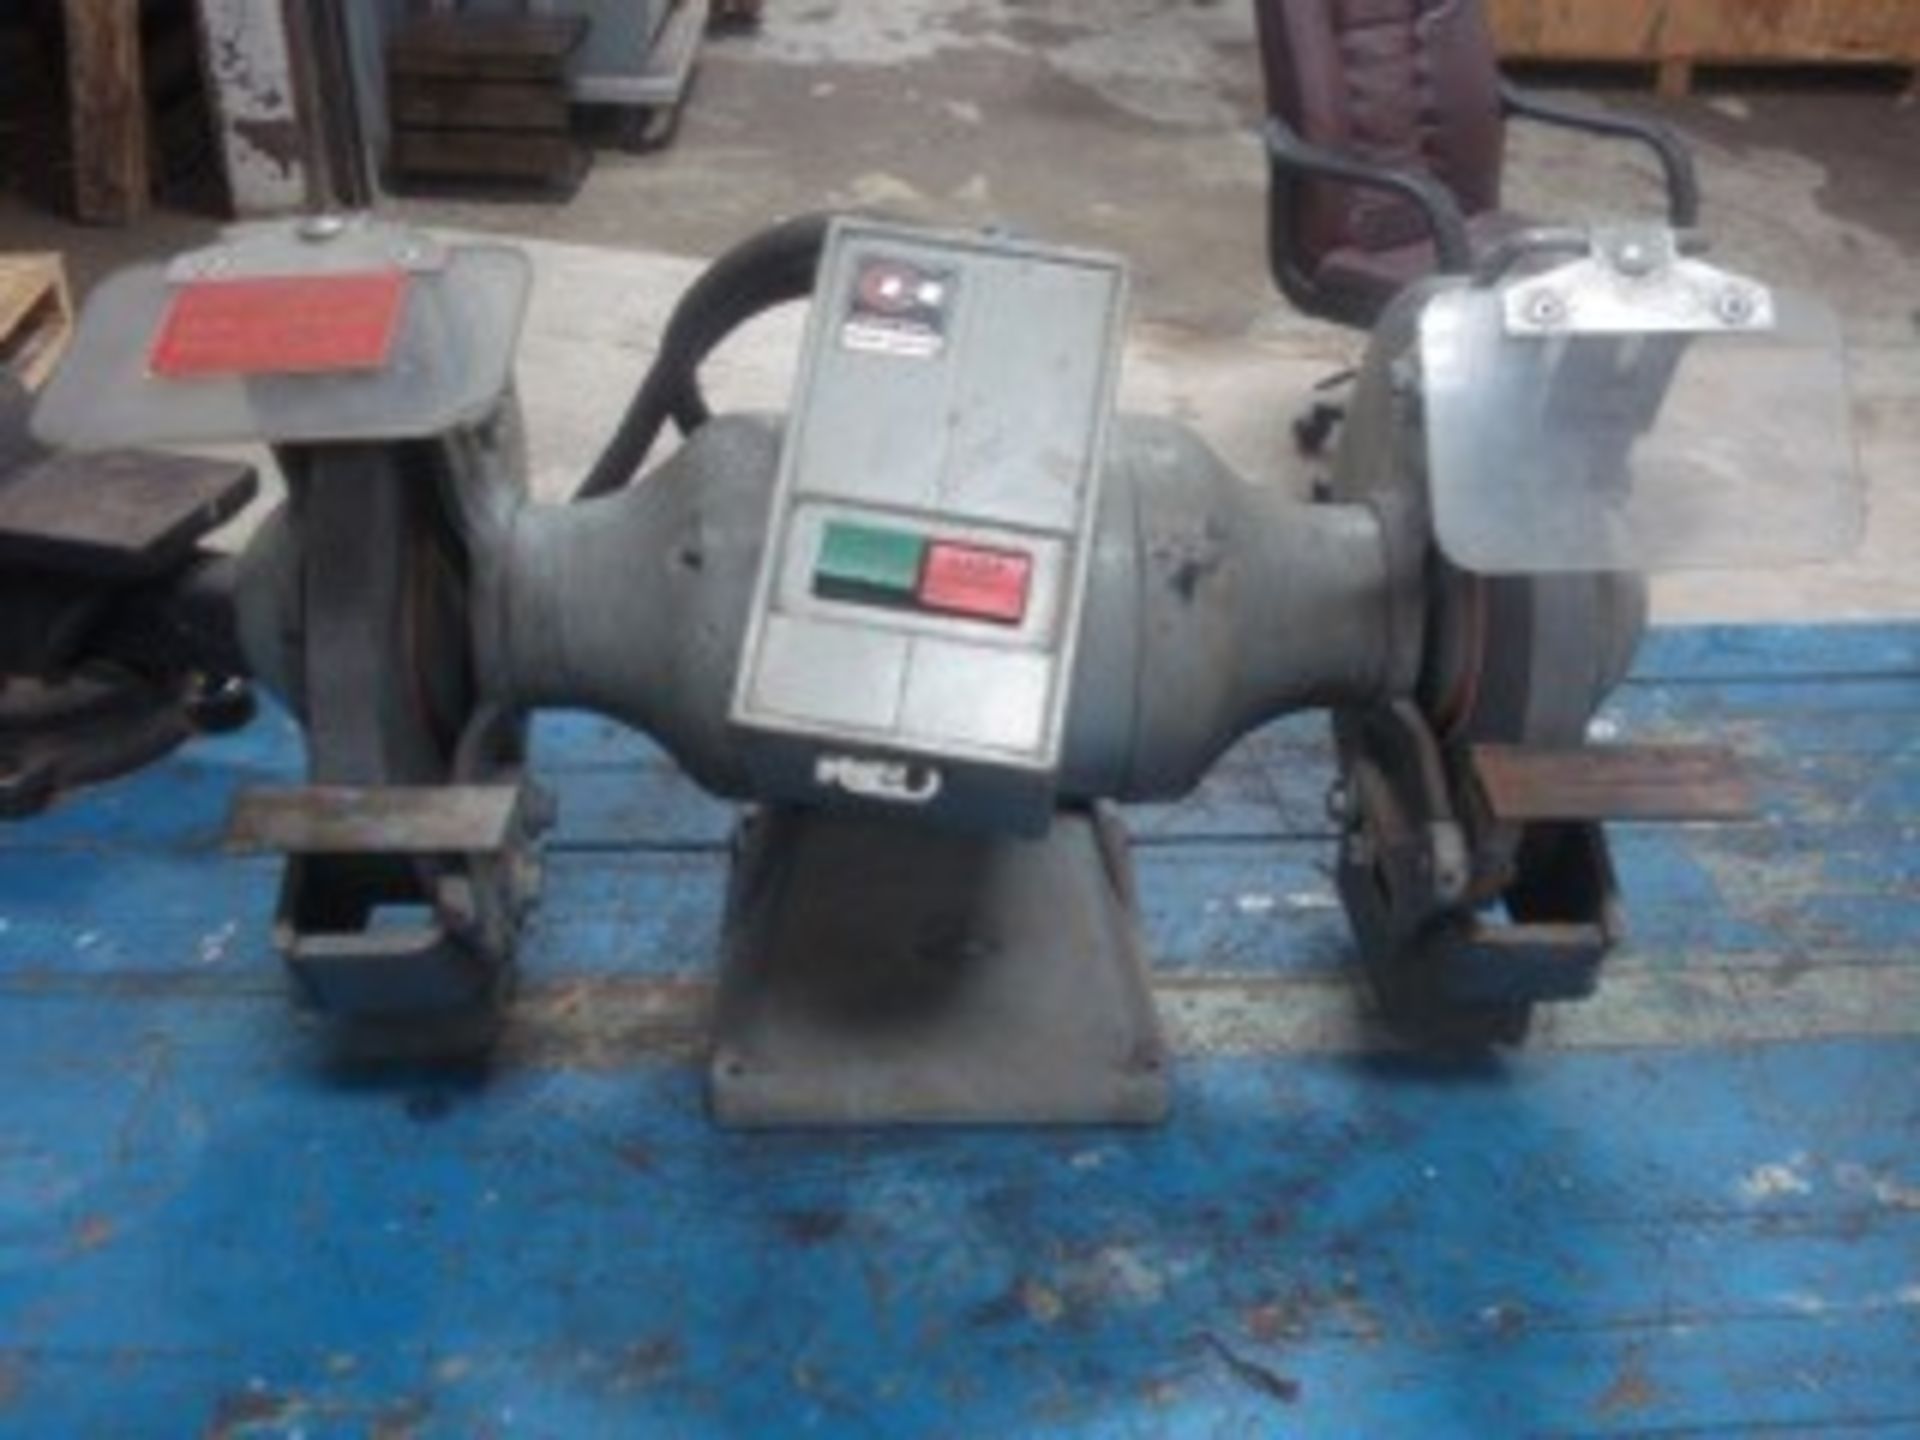 Baldor 1/2 hp grinder, Location MI, Buyer to ship